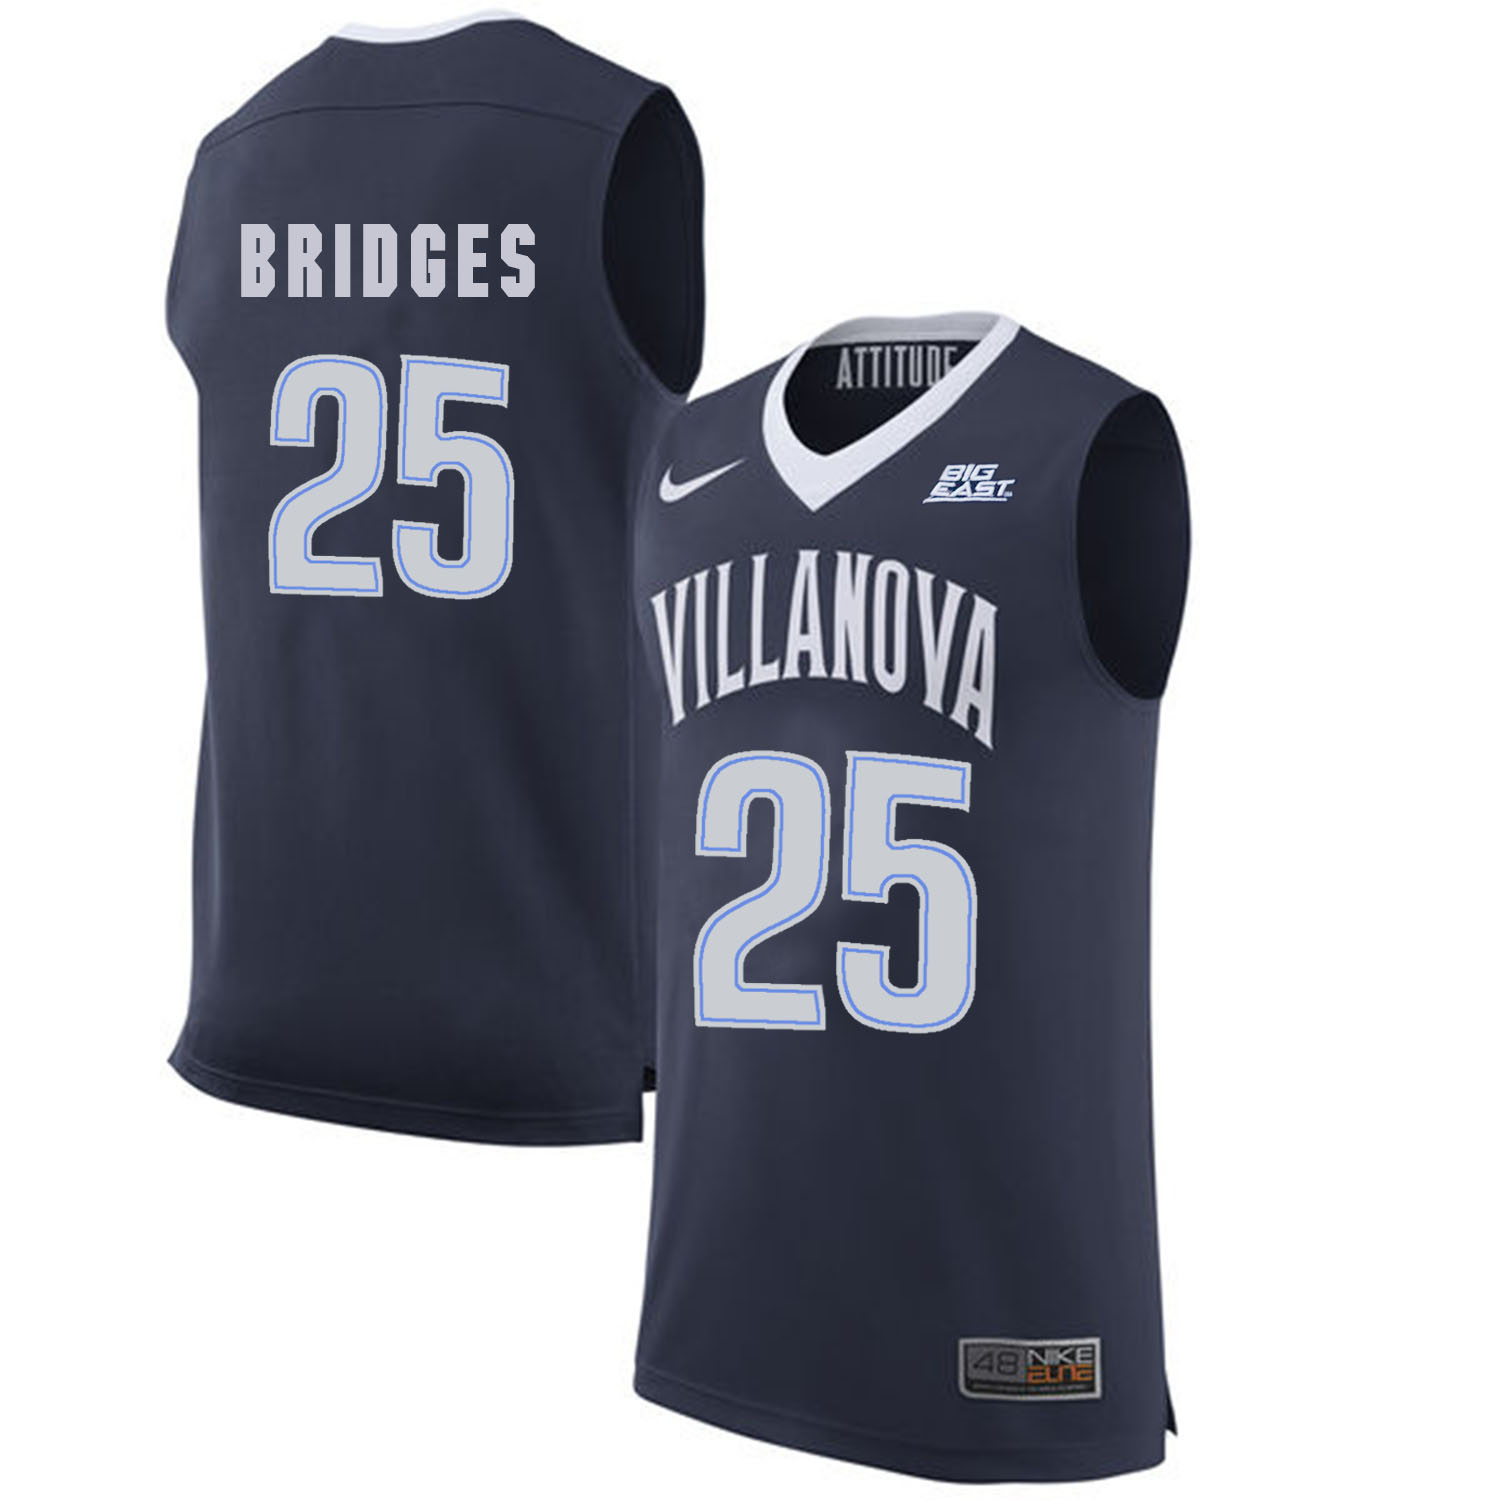 Villanova Wildcats 25 Mikal Bridges Navy College Basketball Elite Jersey